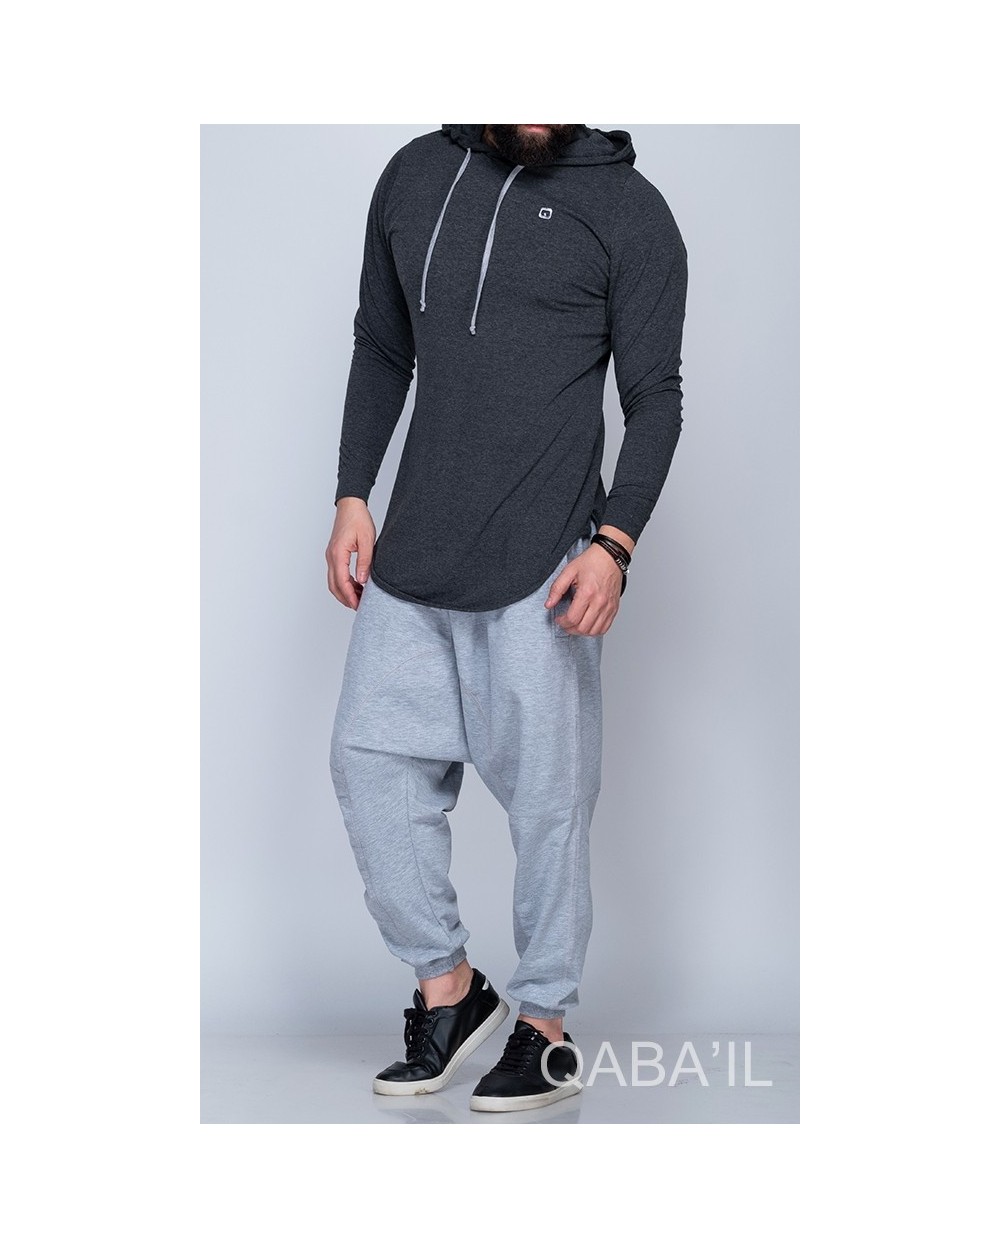 Qabail hooded long sleeve t-shirt